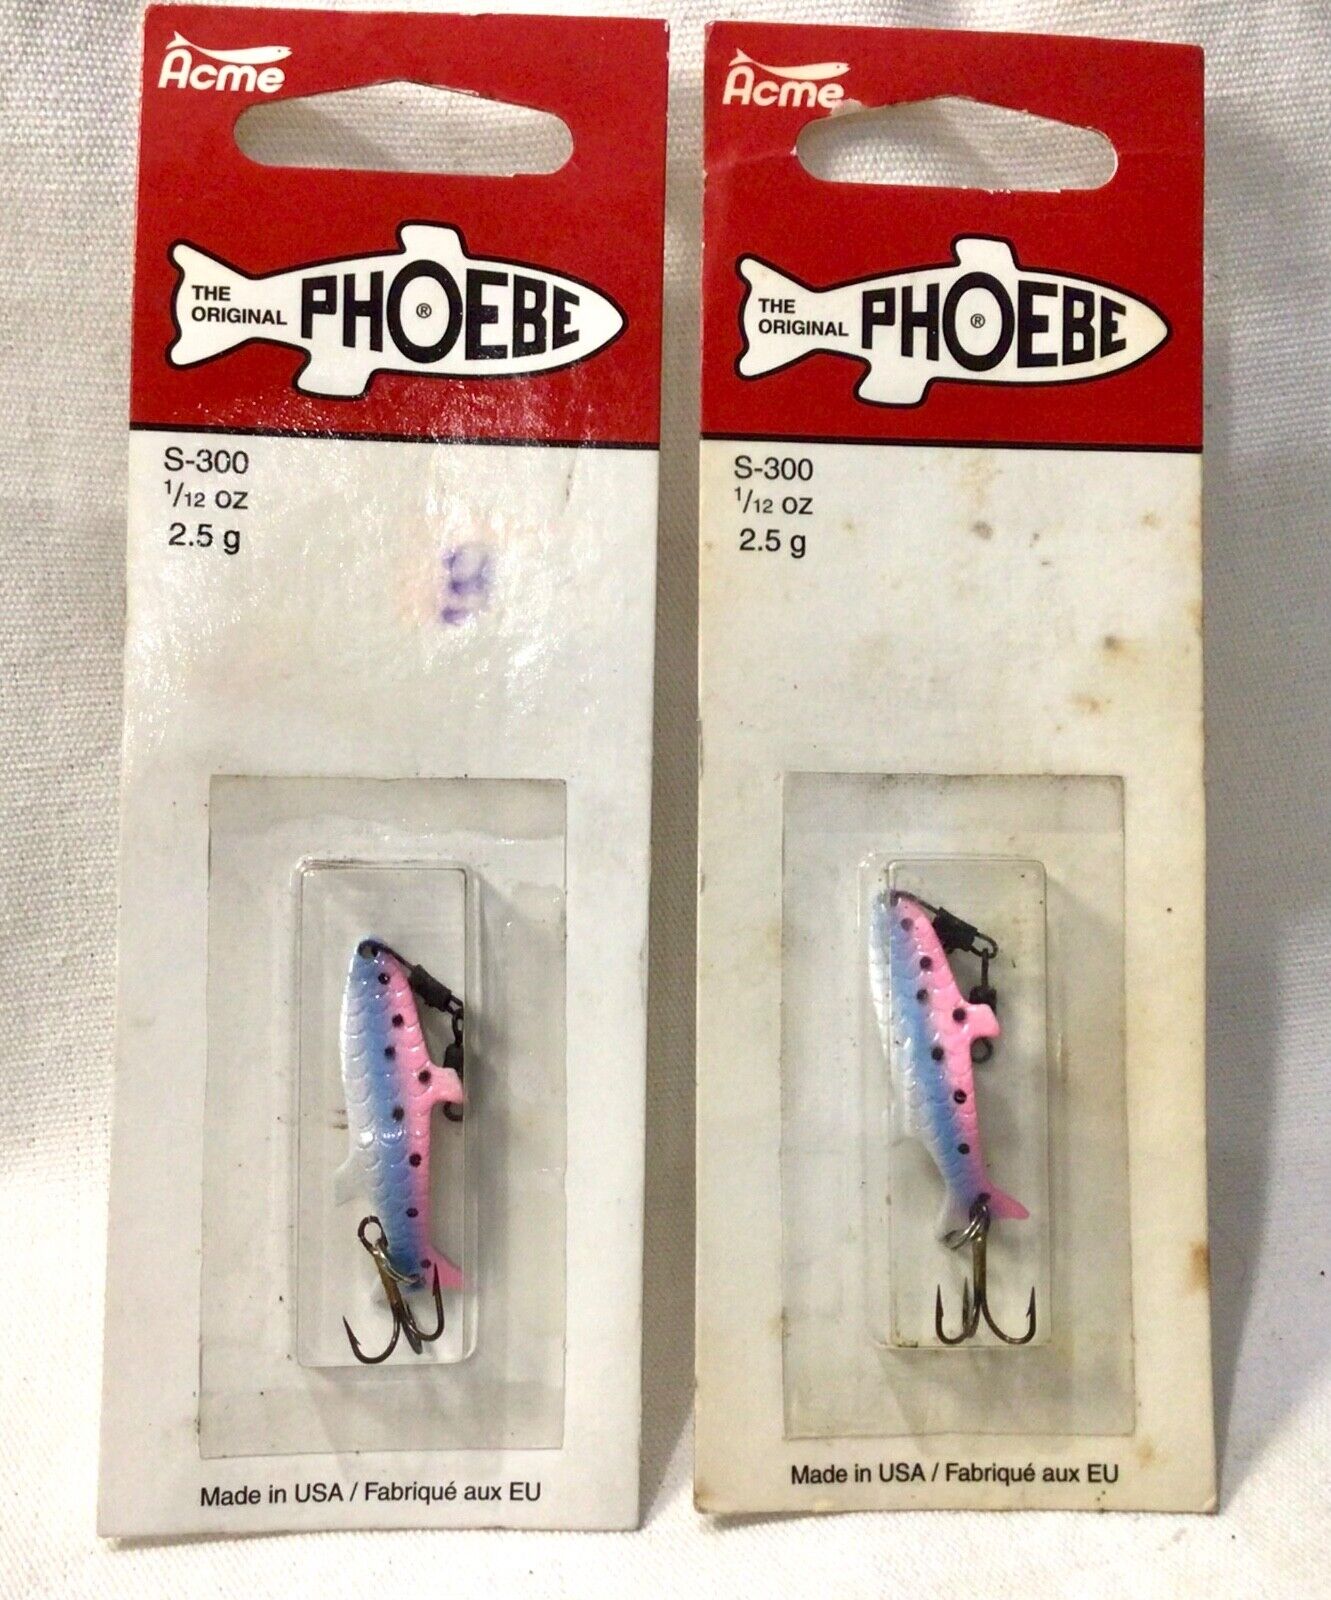 Купить 2 Acme PHOEBE LURES *S-300 1/12 oz* Rainbow trout pink blue